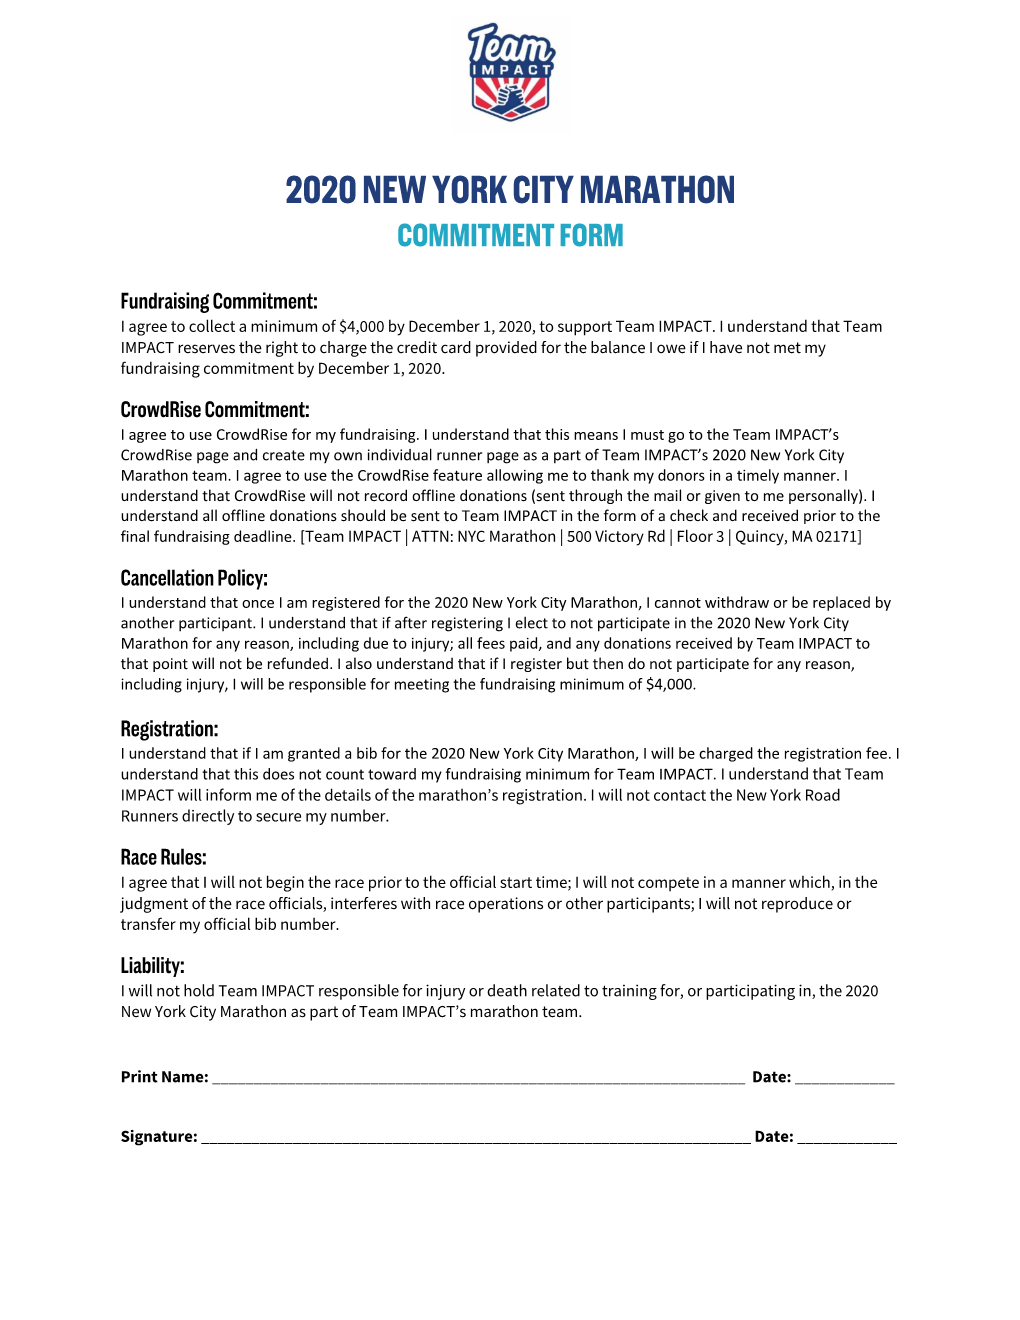 2020 New York City Marathon Commitment Form